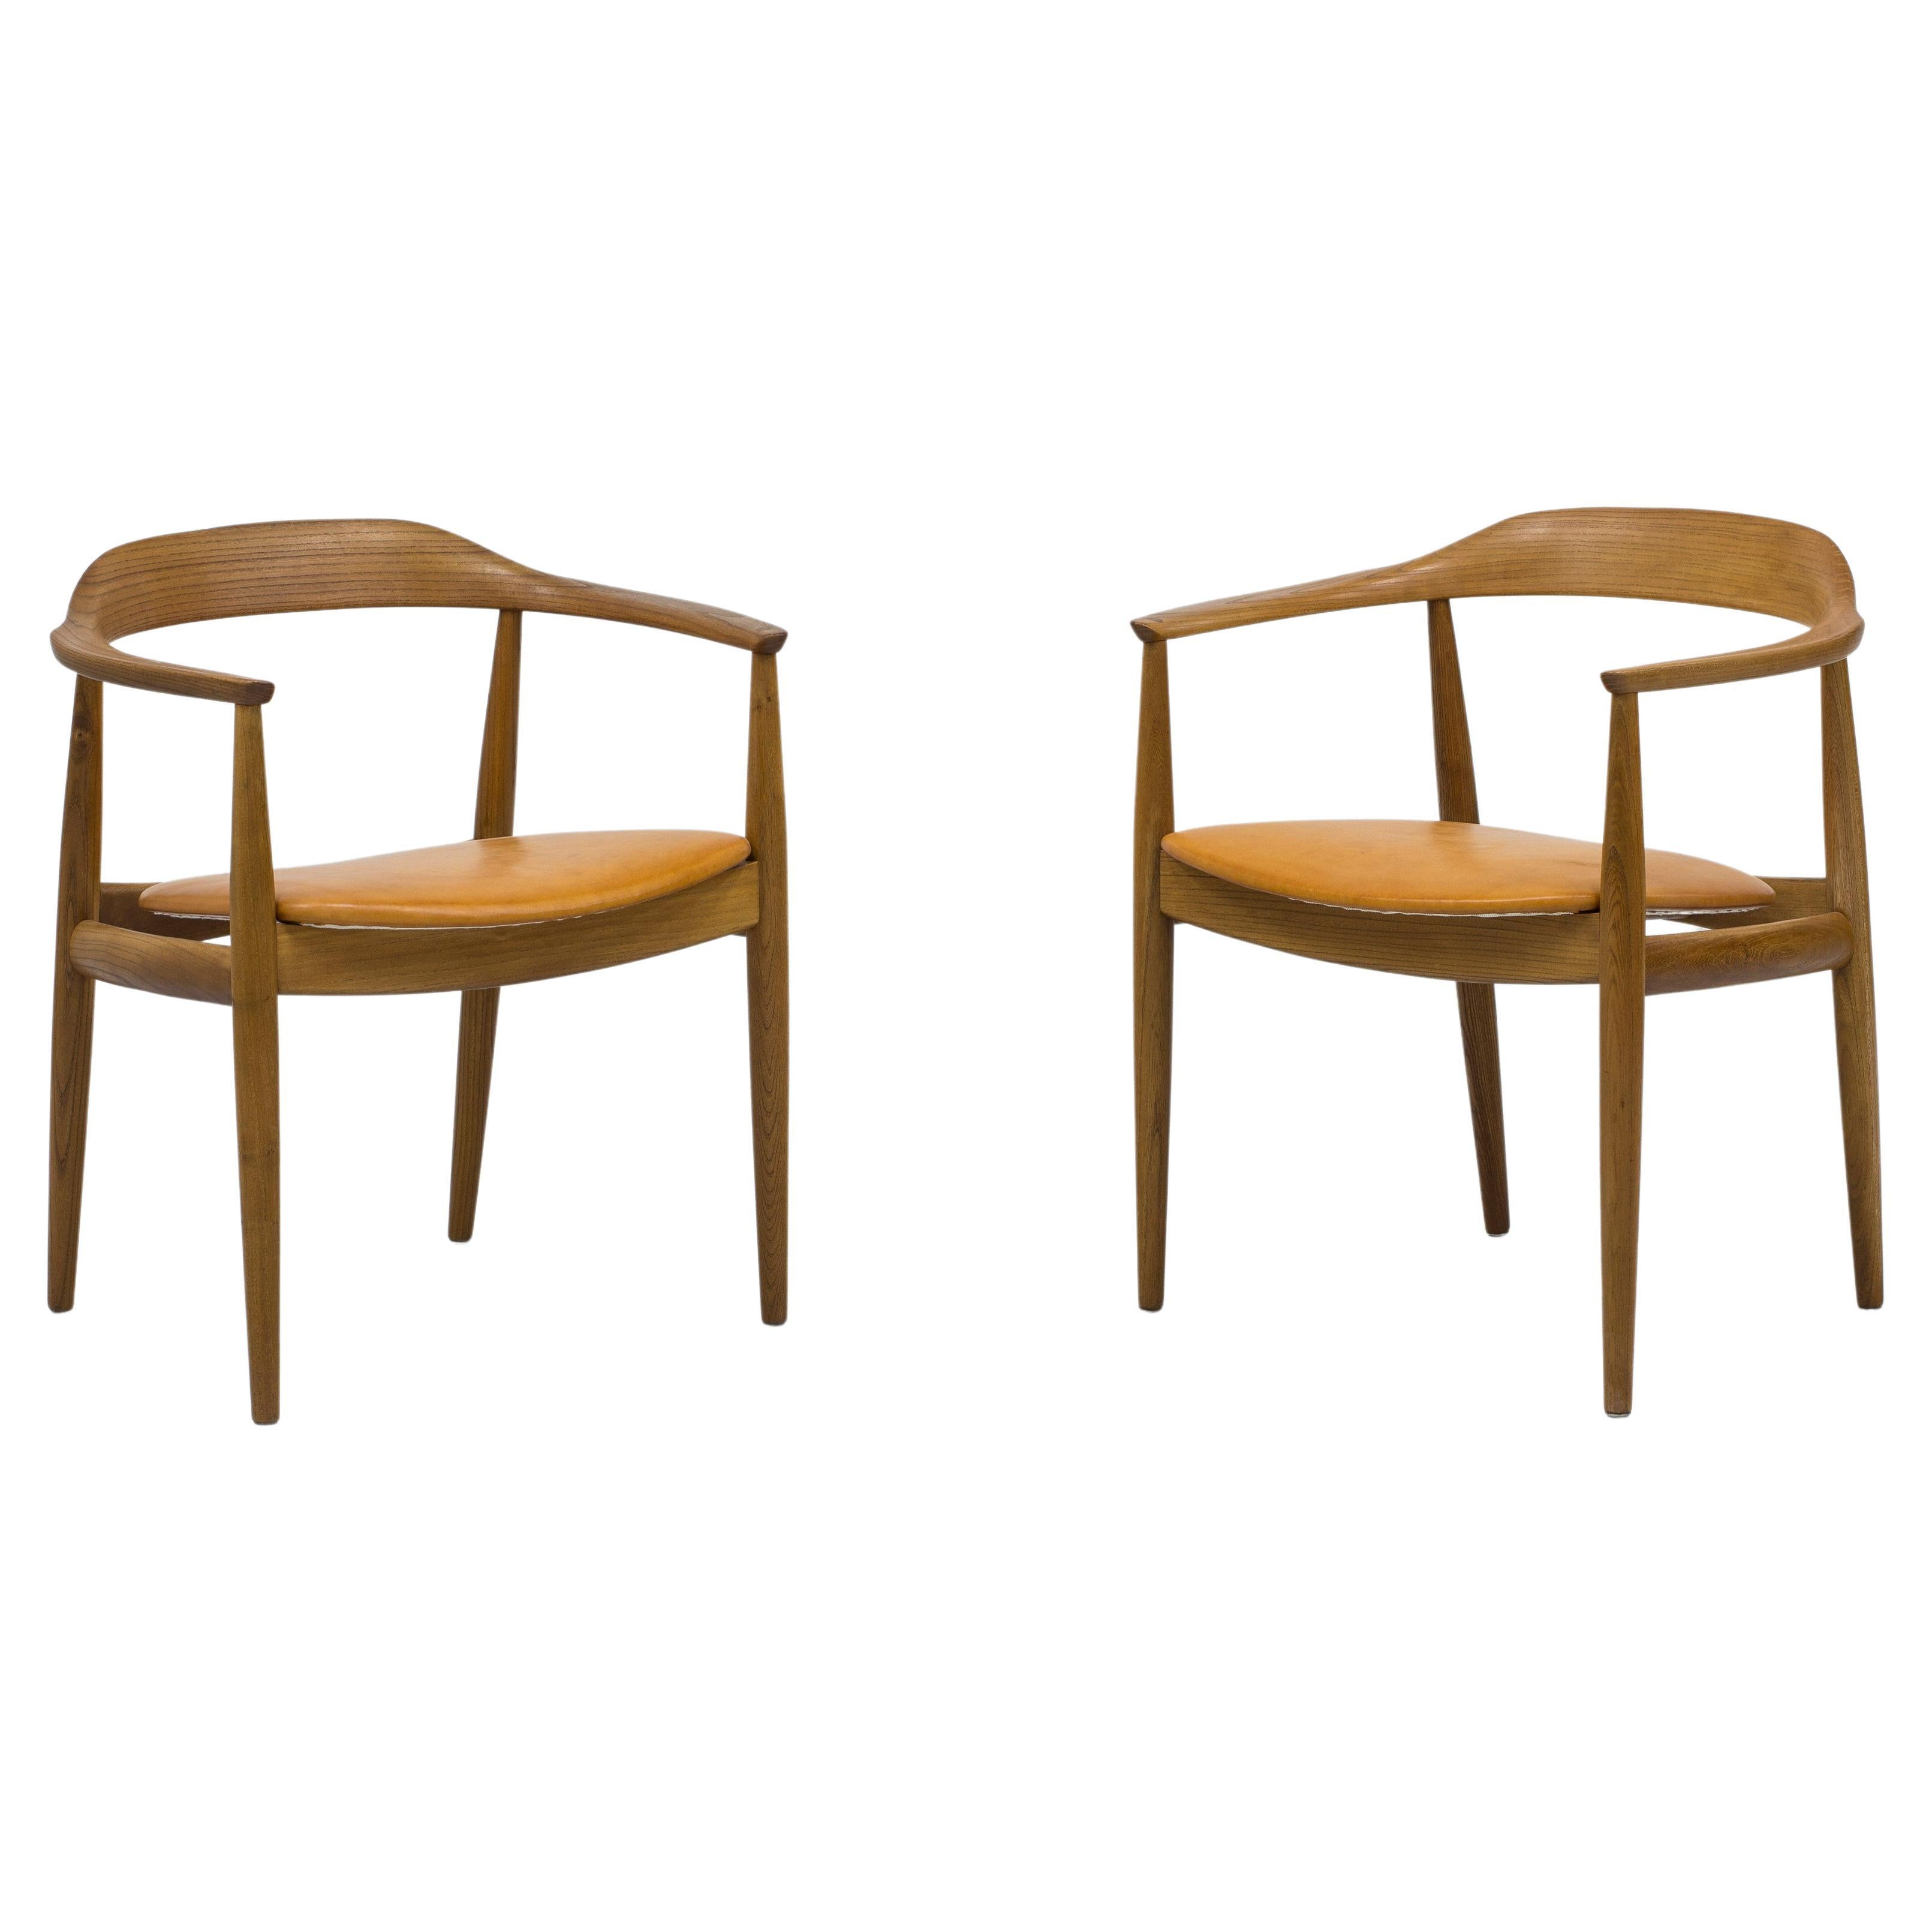 Arm chairs in elm by Arne Wahl Iversen, by cabinetmaker Niels Eilersen, Denmark